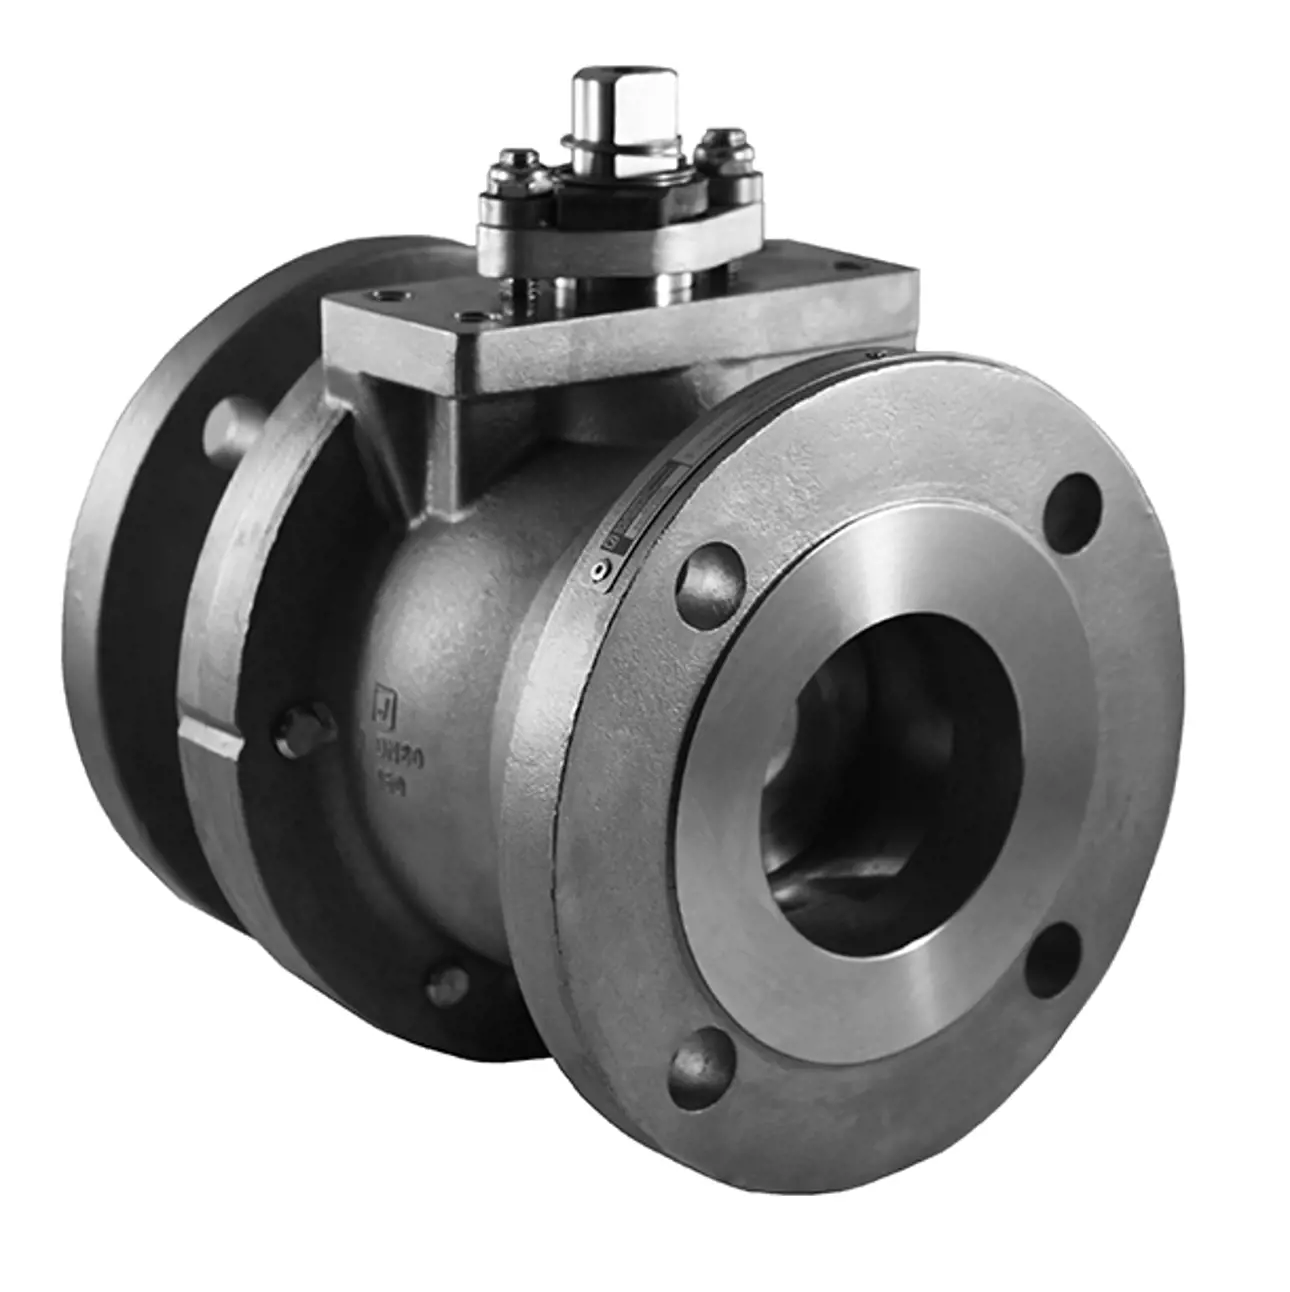 ValmetJamesbury™ ball valve, series 9150RR